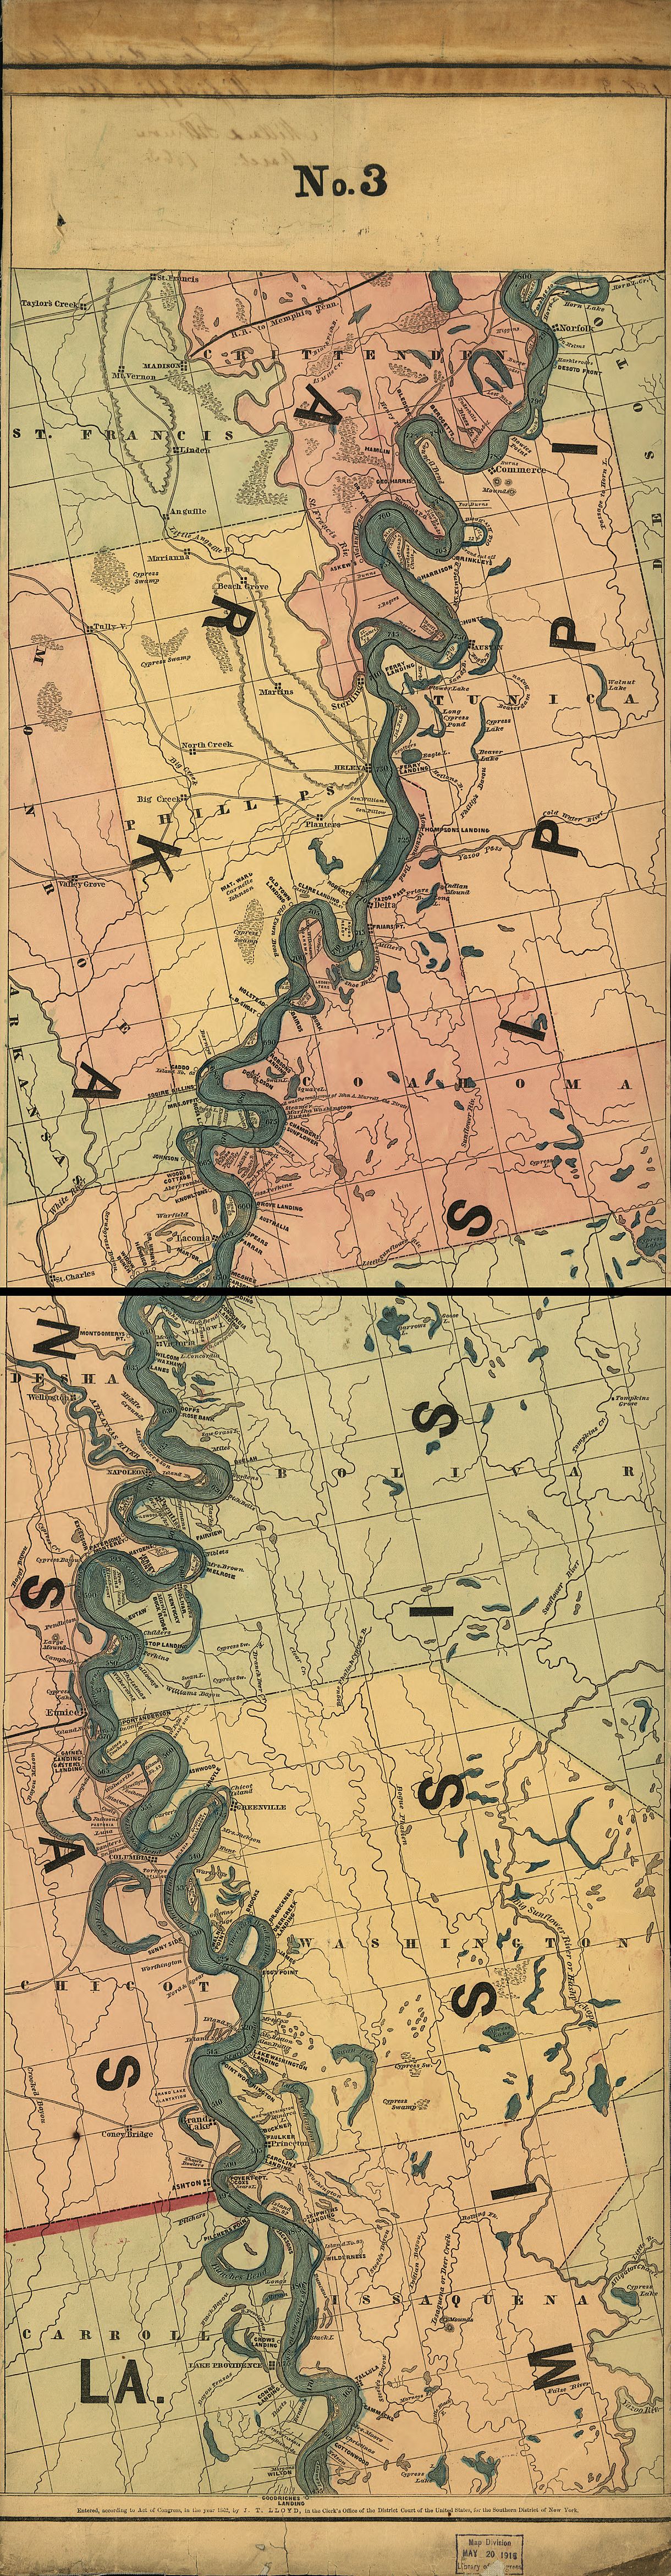 1862 map showing Austin